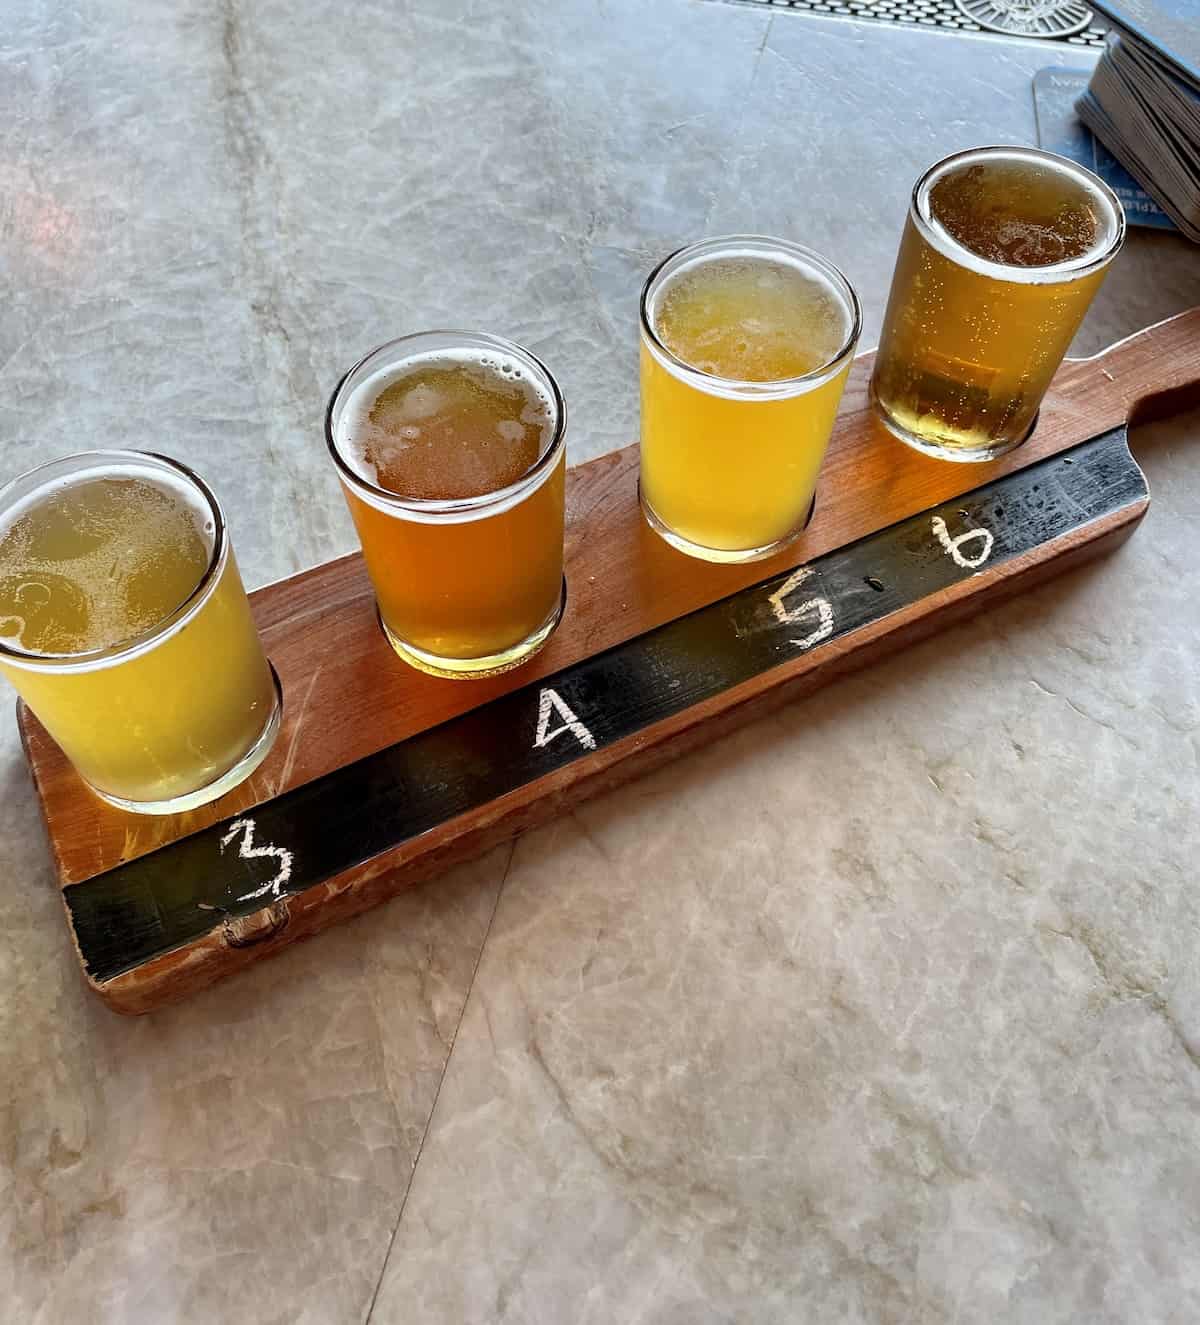 Numbered flight of beers.